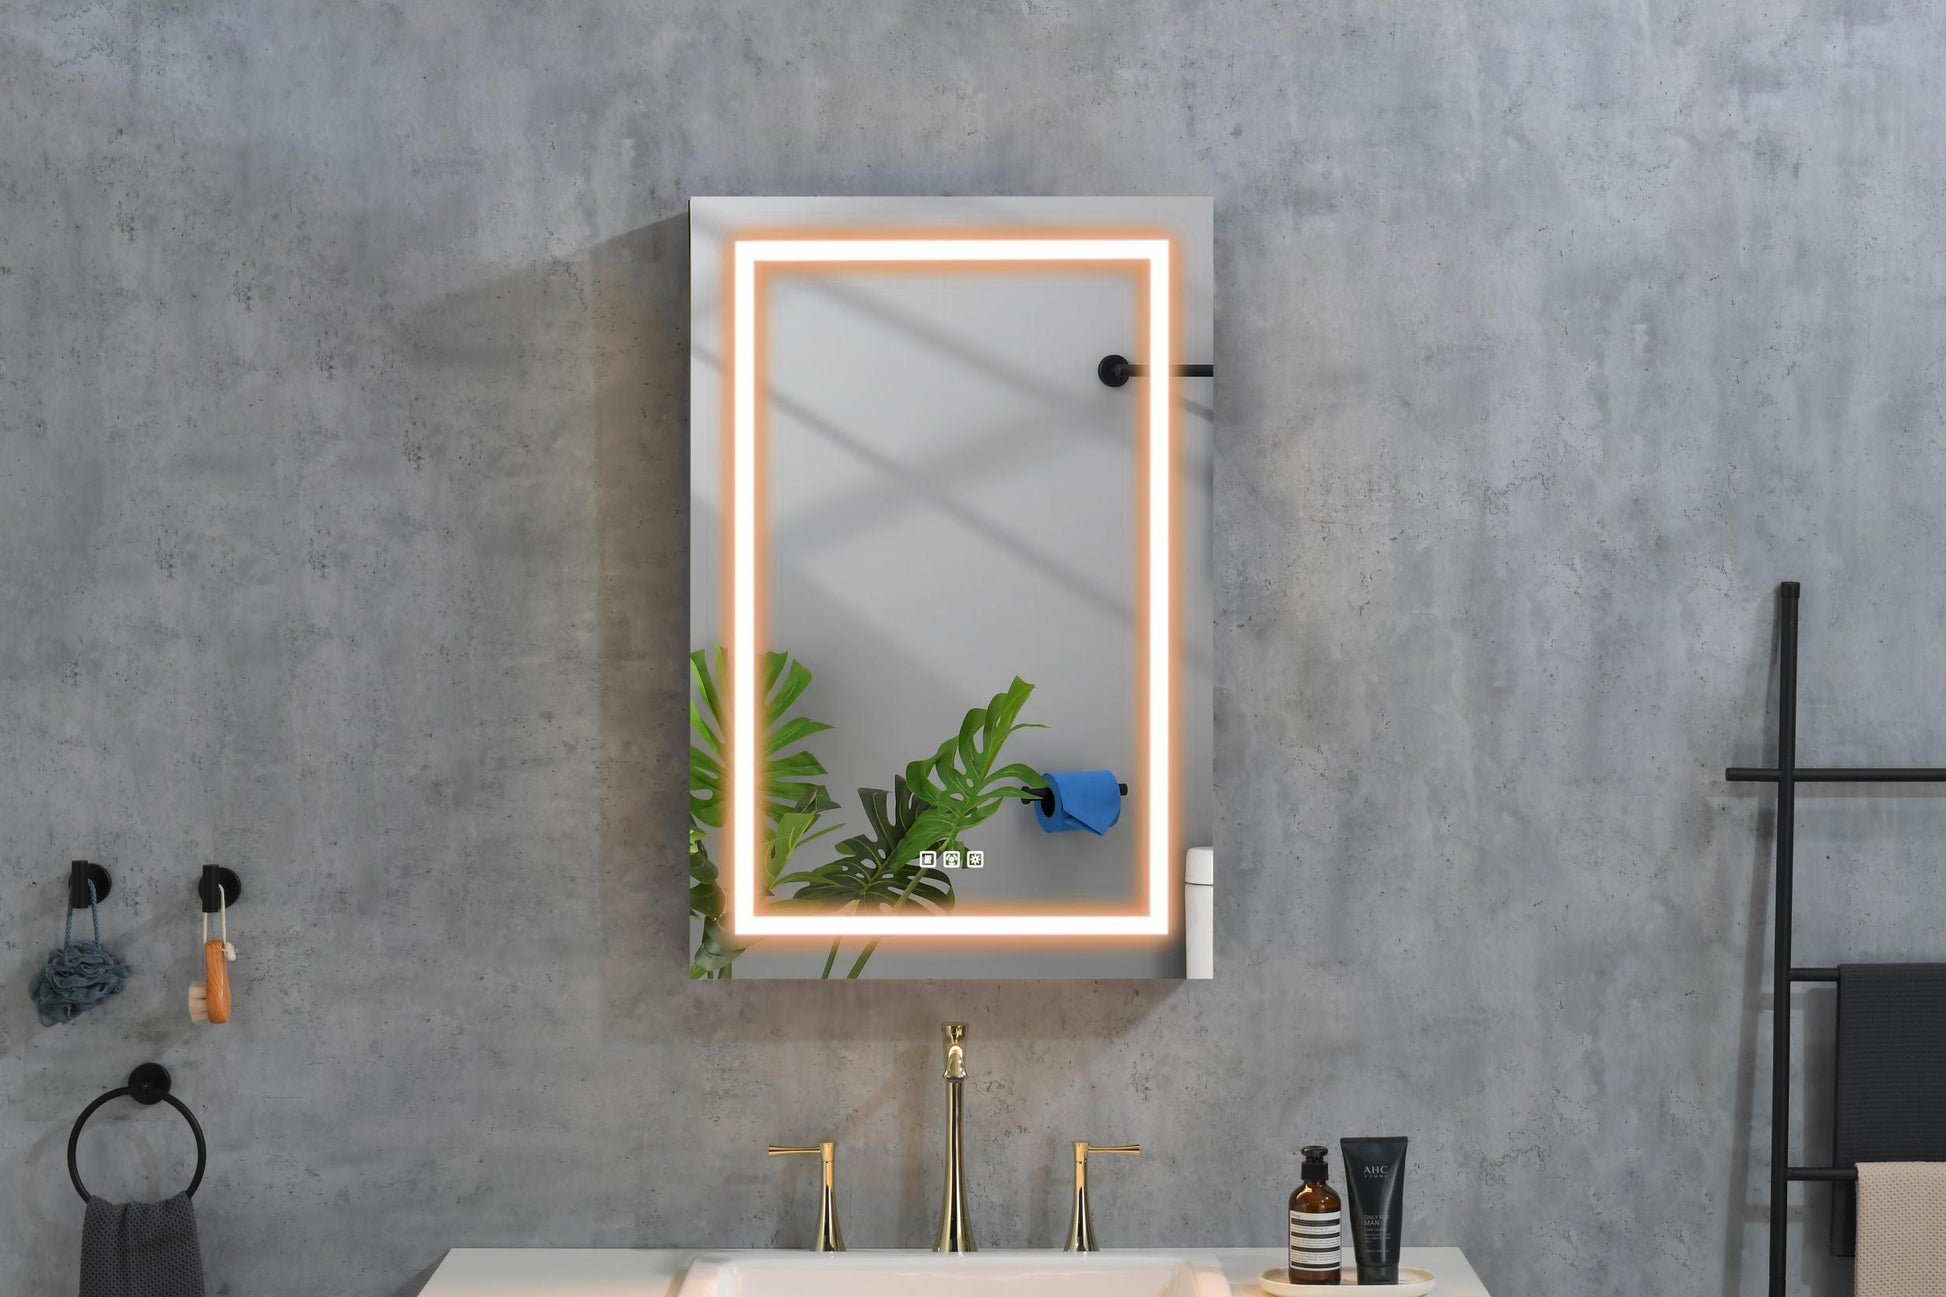 LED Lighted Bathroom Medicine Cabinet with Mirror matt black-aluminium